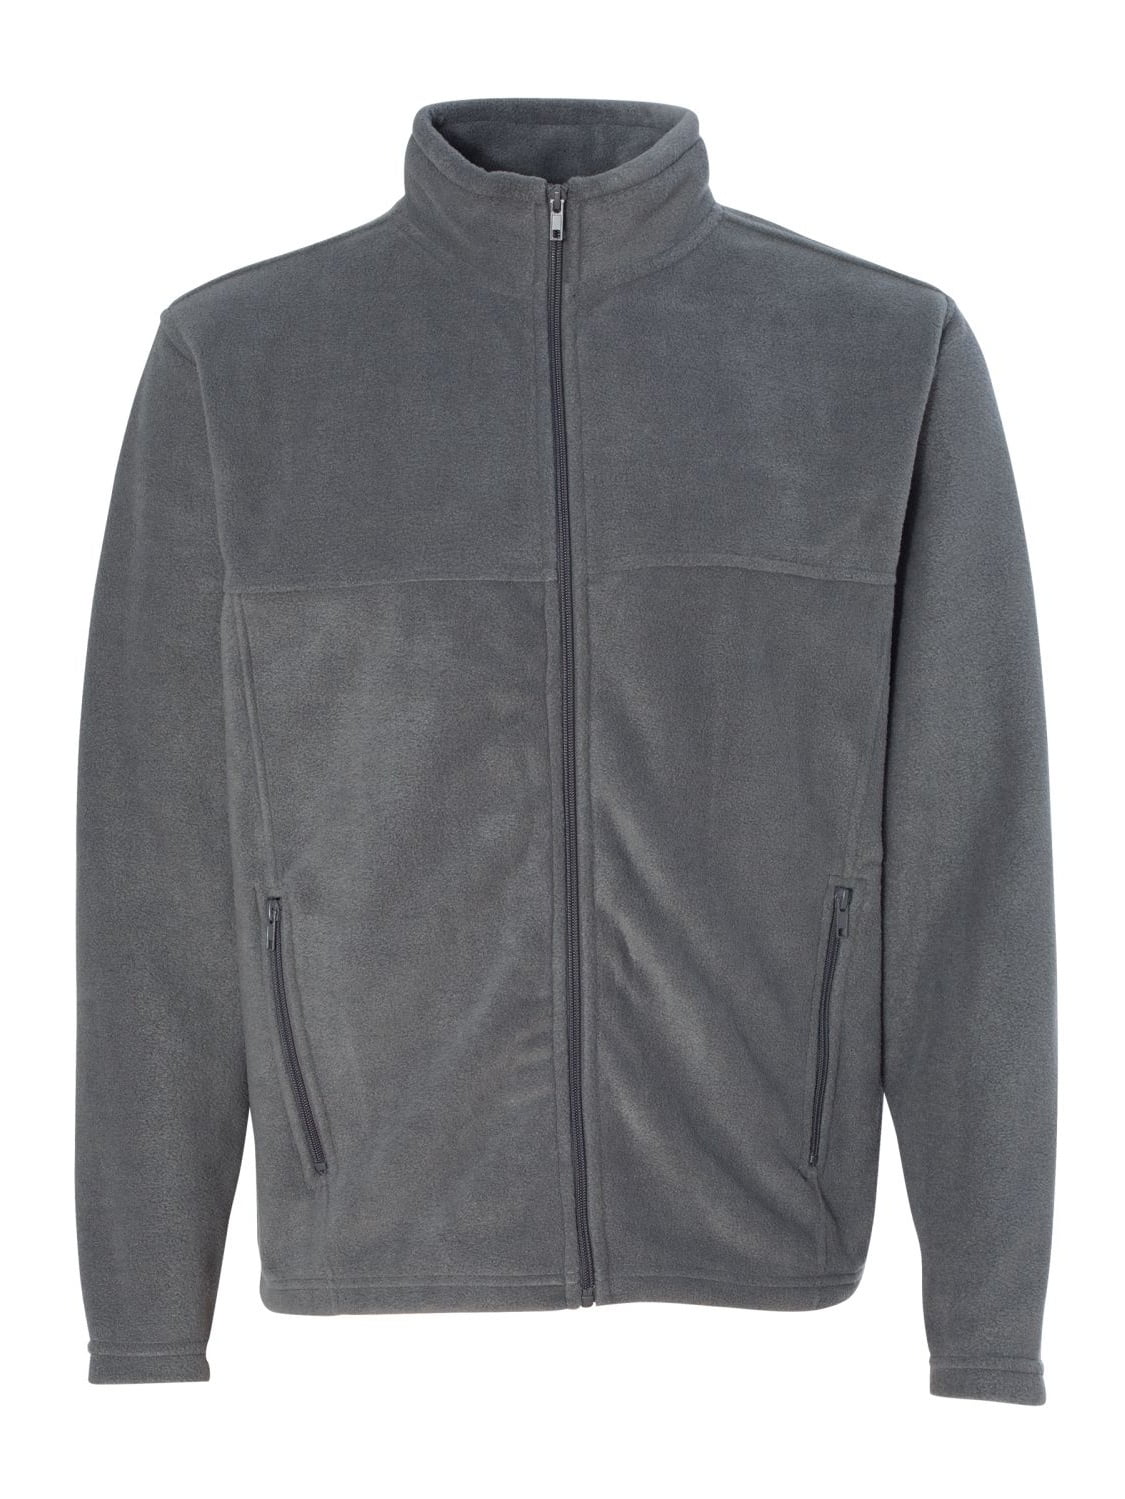 Classic Sport Fleece Full-Zip Jacket - Storm - XL - Walmart.com